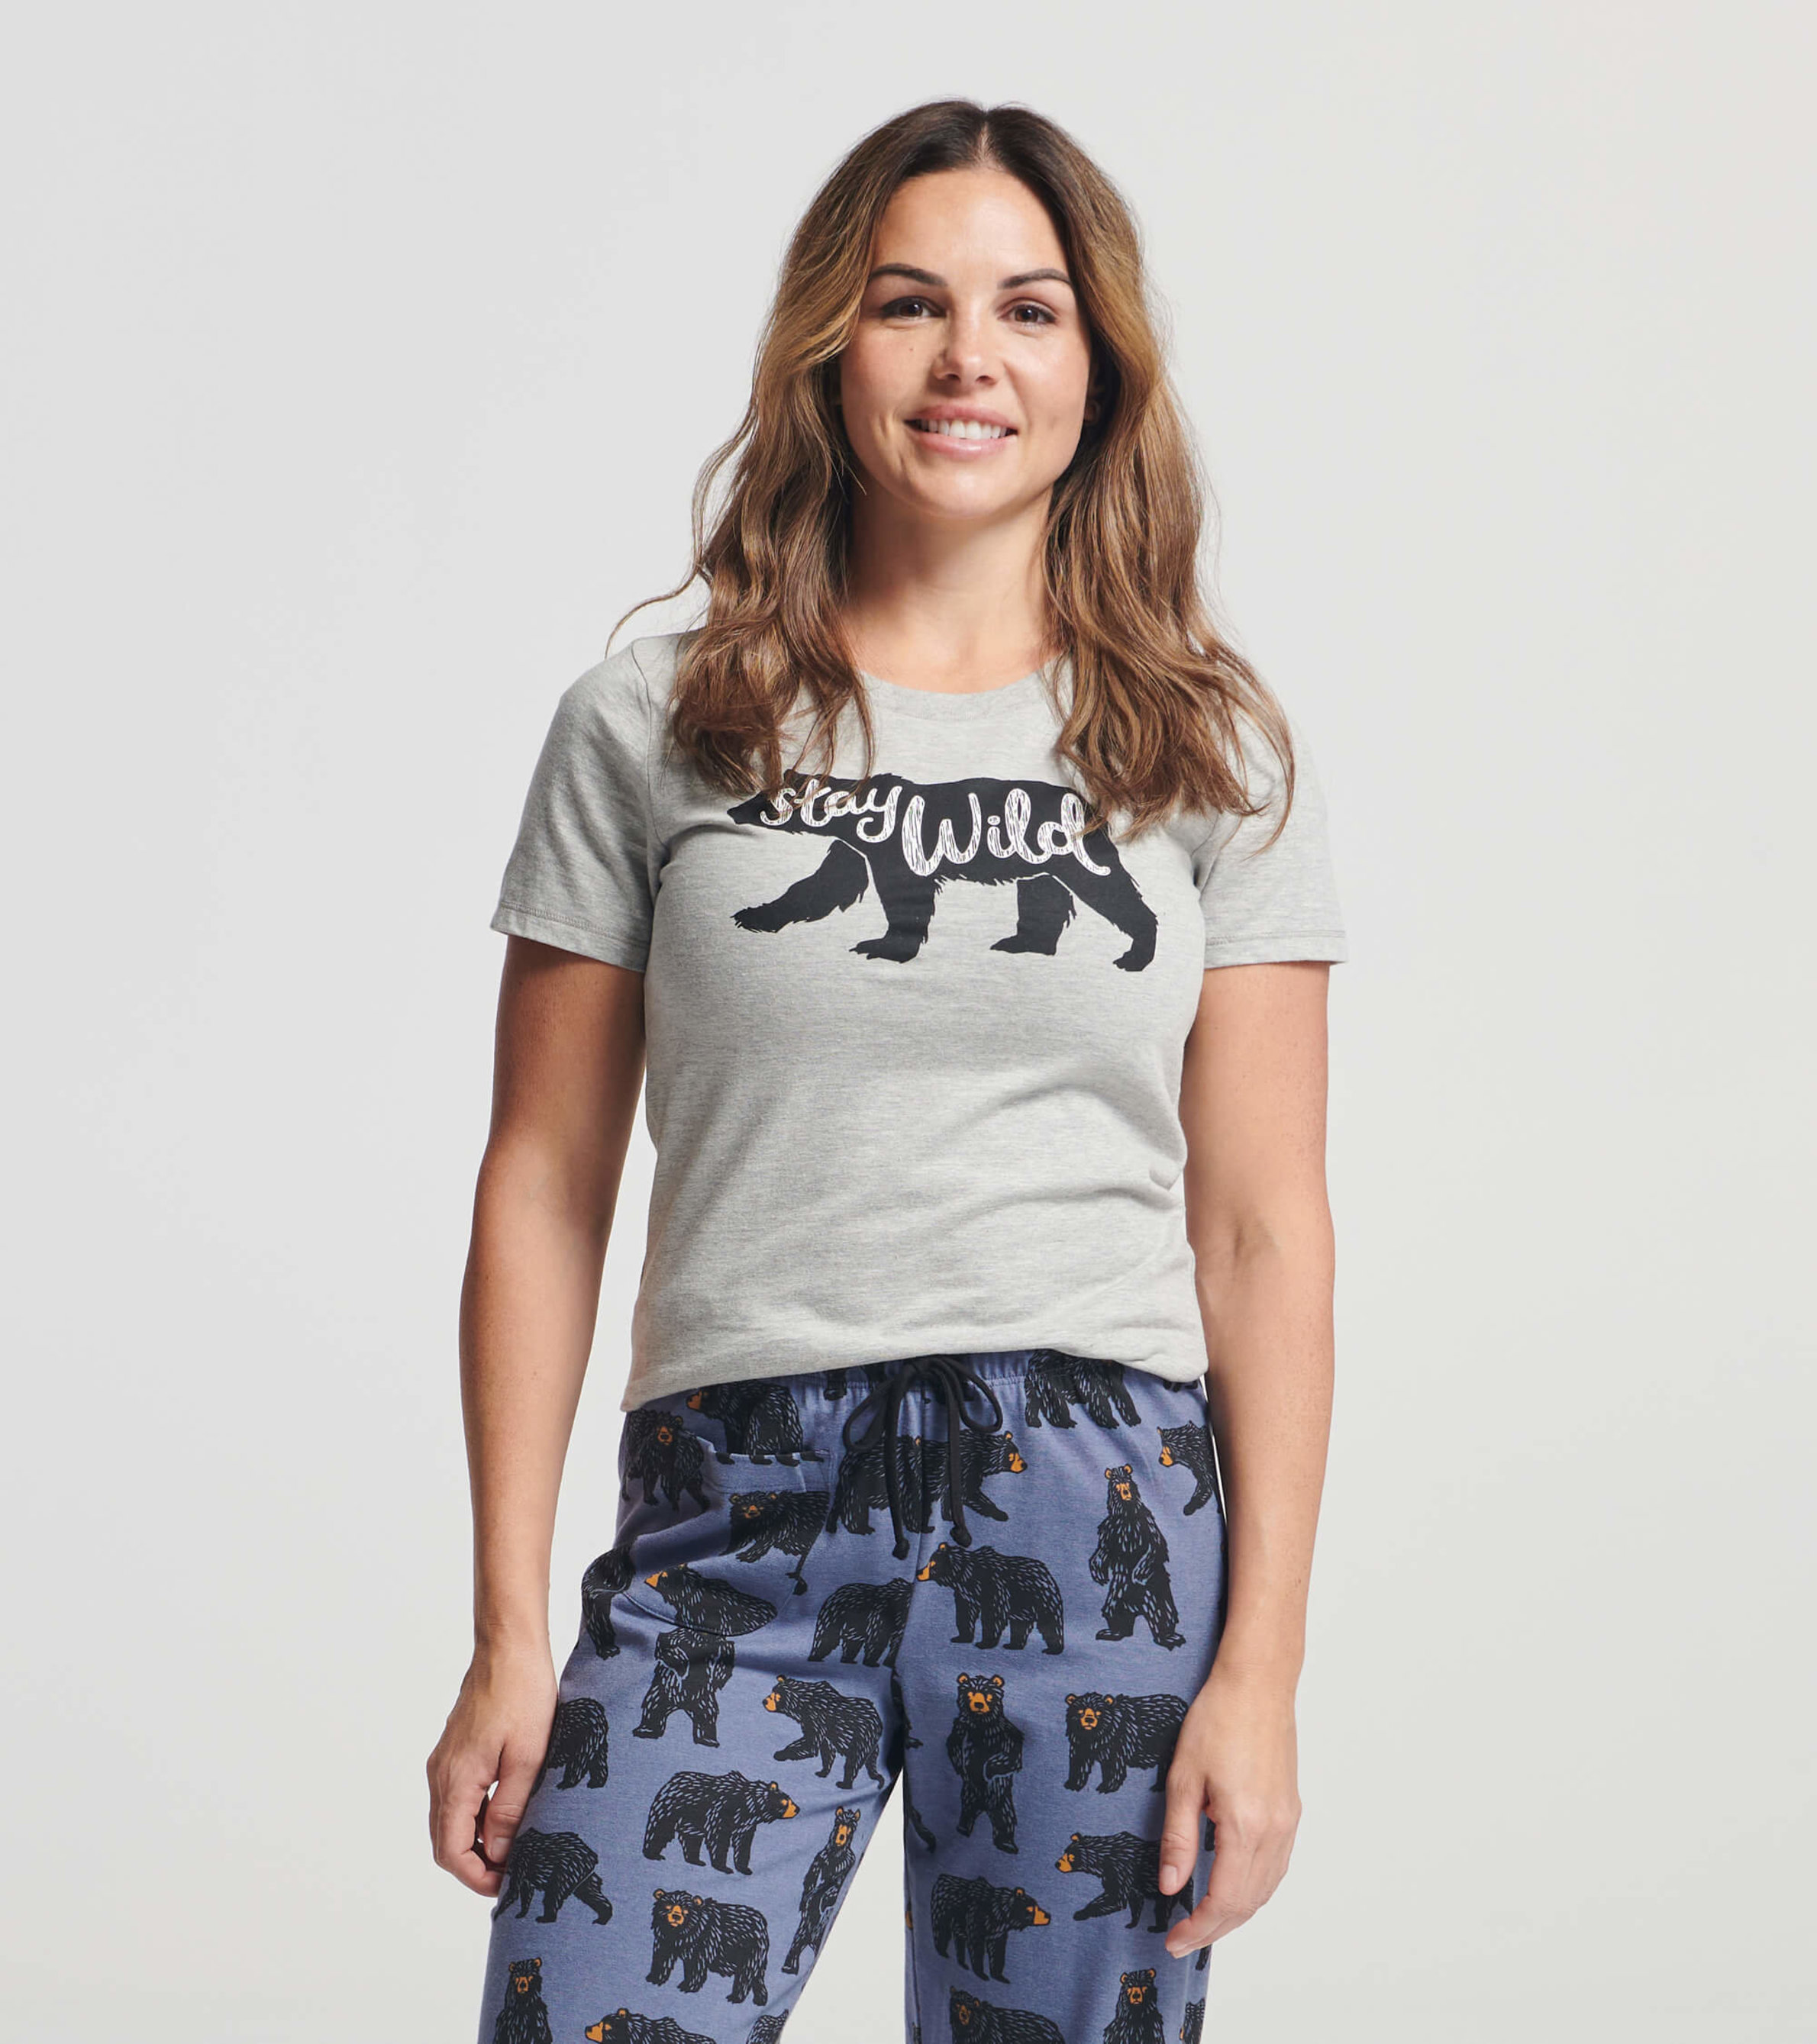 Black Bears Women's Tee and Pants Pajama Separates - Little Blue